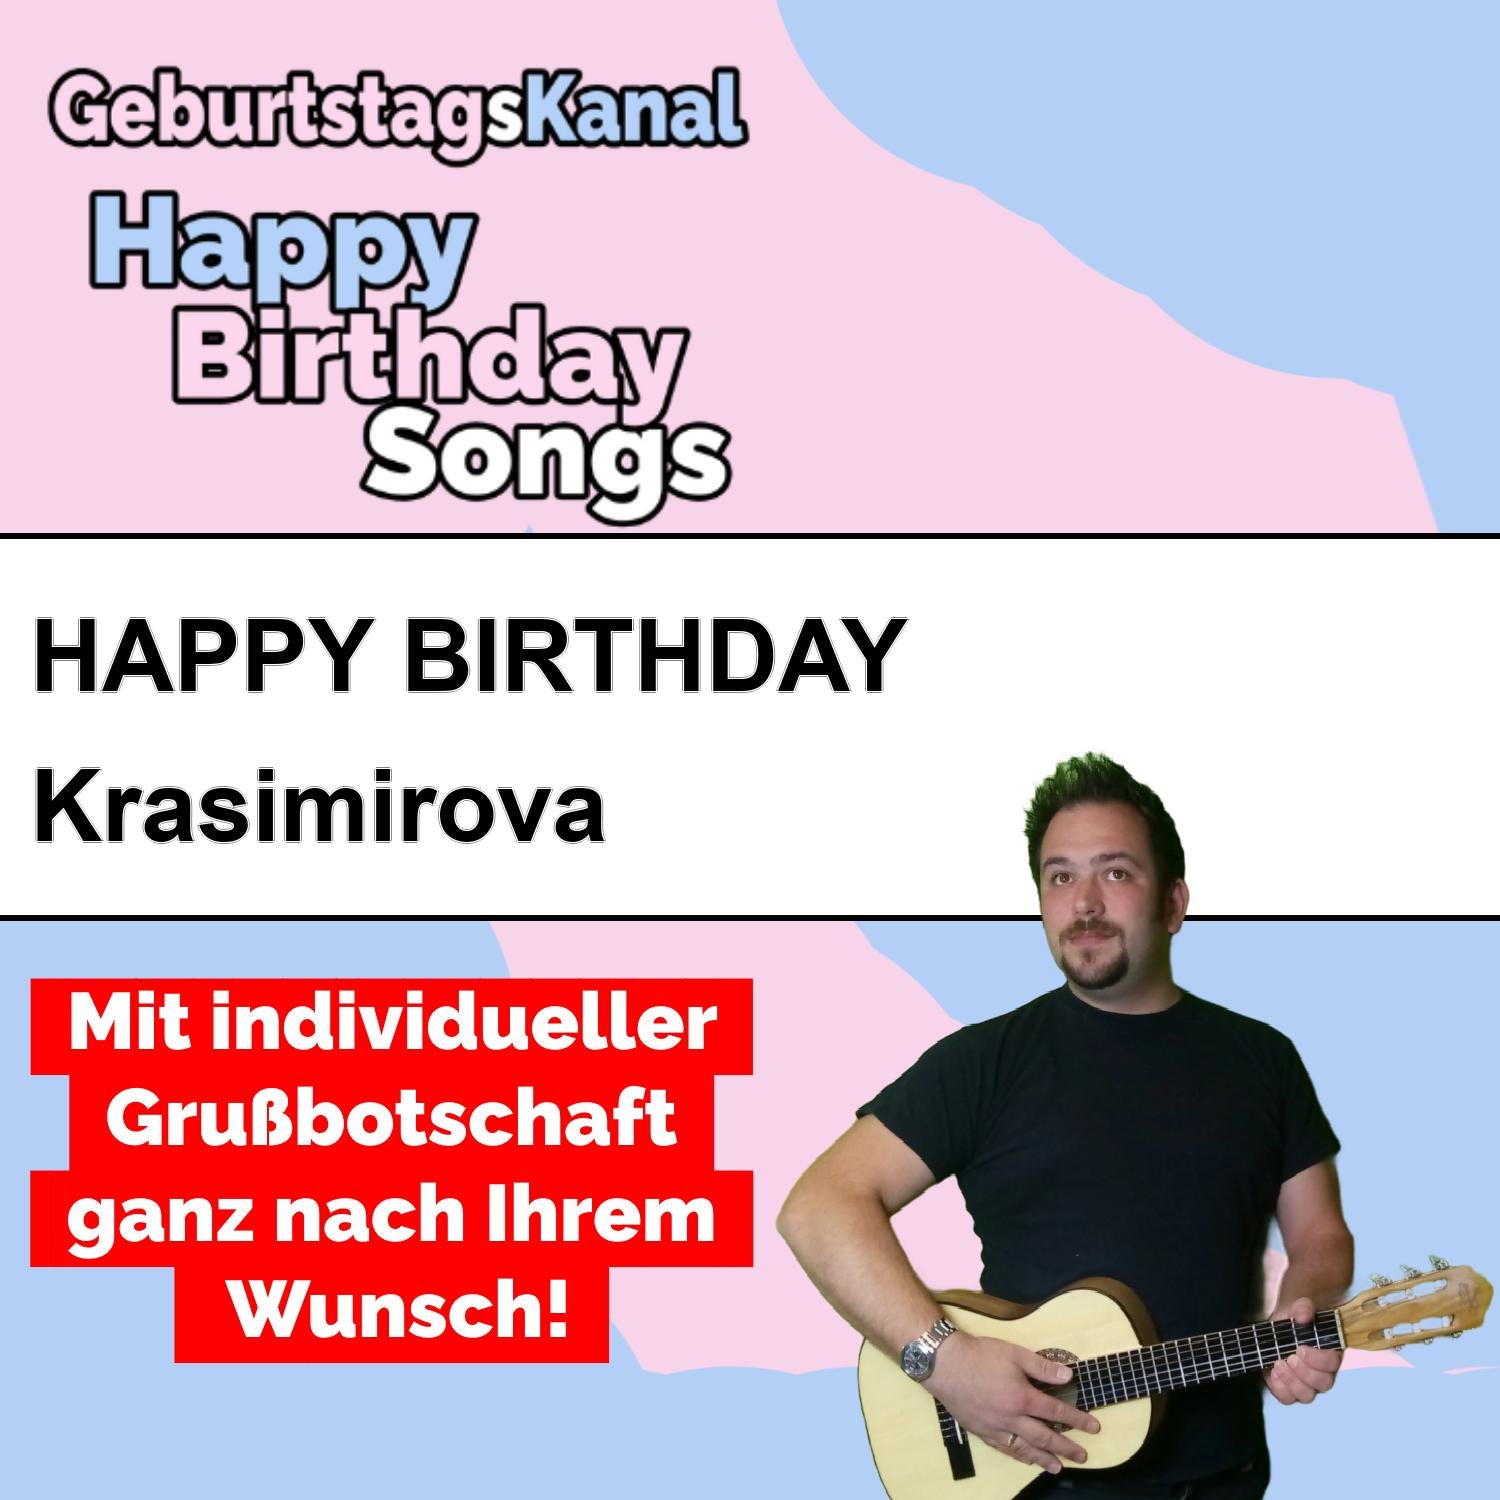 Produktbild Happy Birthday to you Krasimirova mit Wunschgrußbotschaft